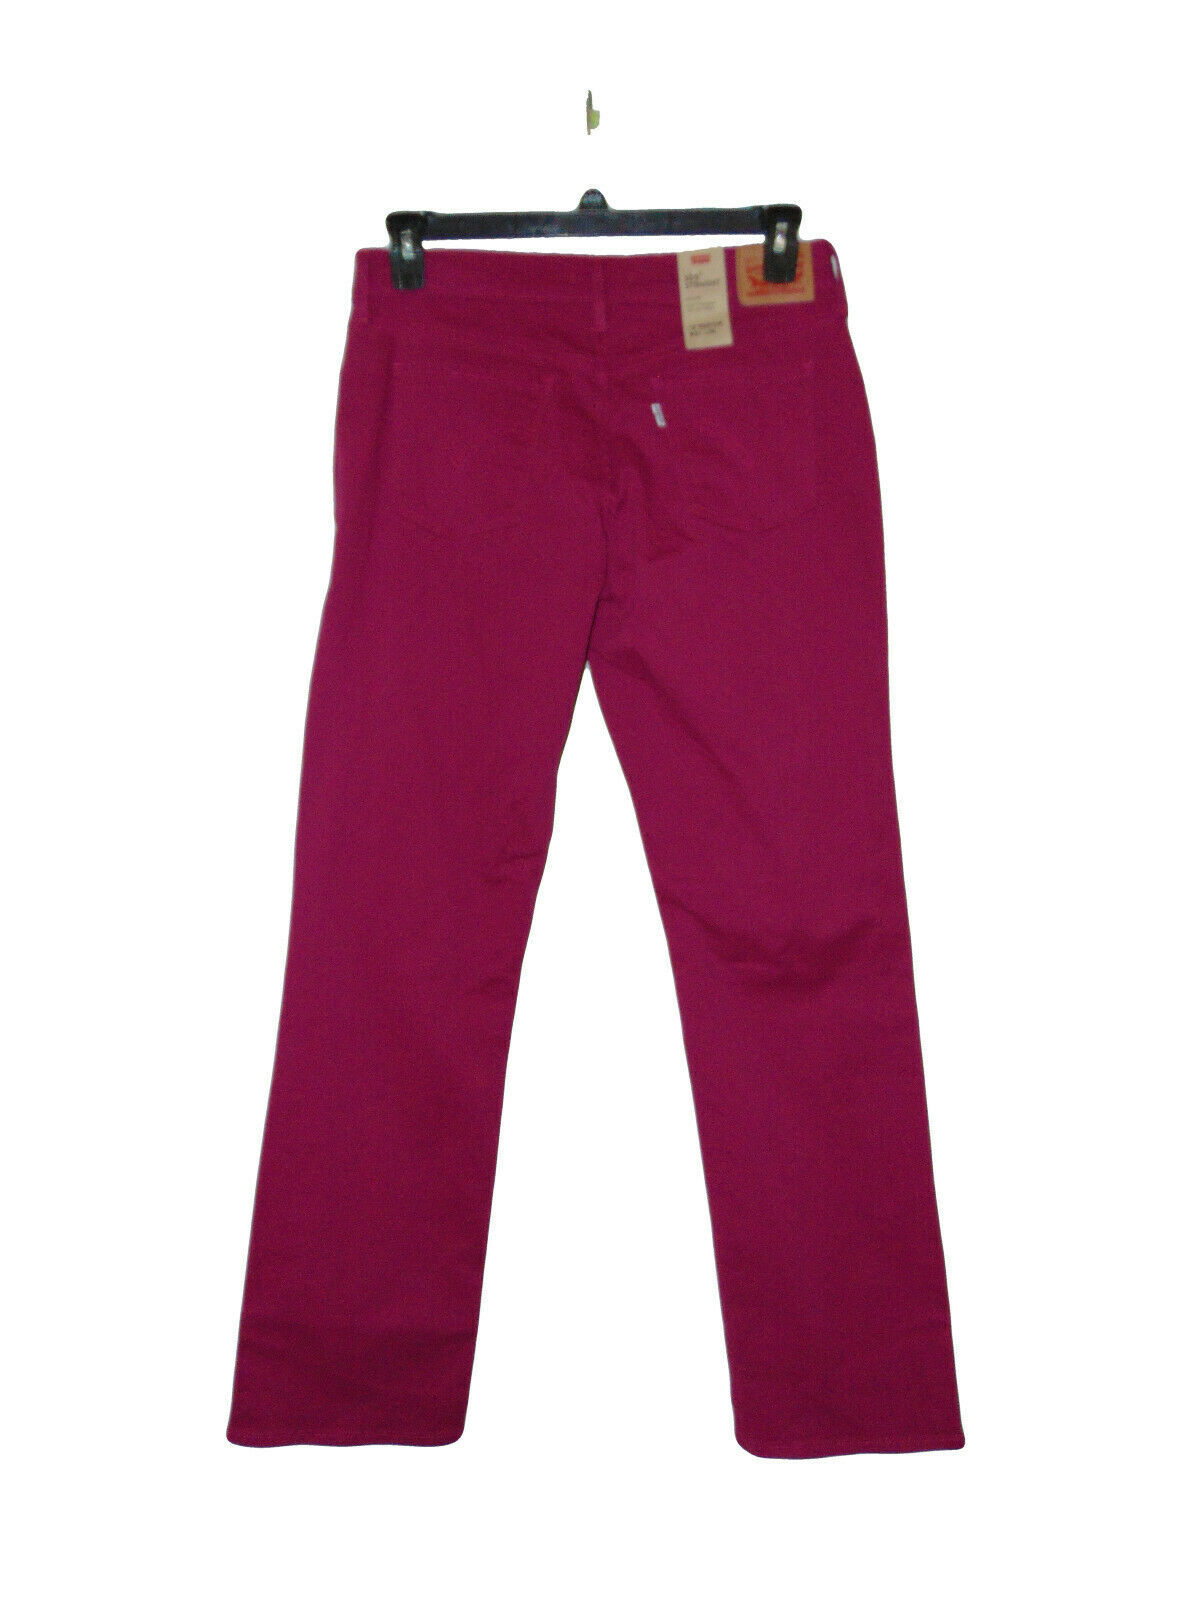 Levis Levi Strauss 505 Jeans 12 Medium Straight Pink - Jeans